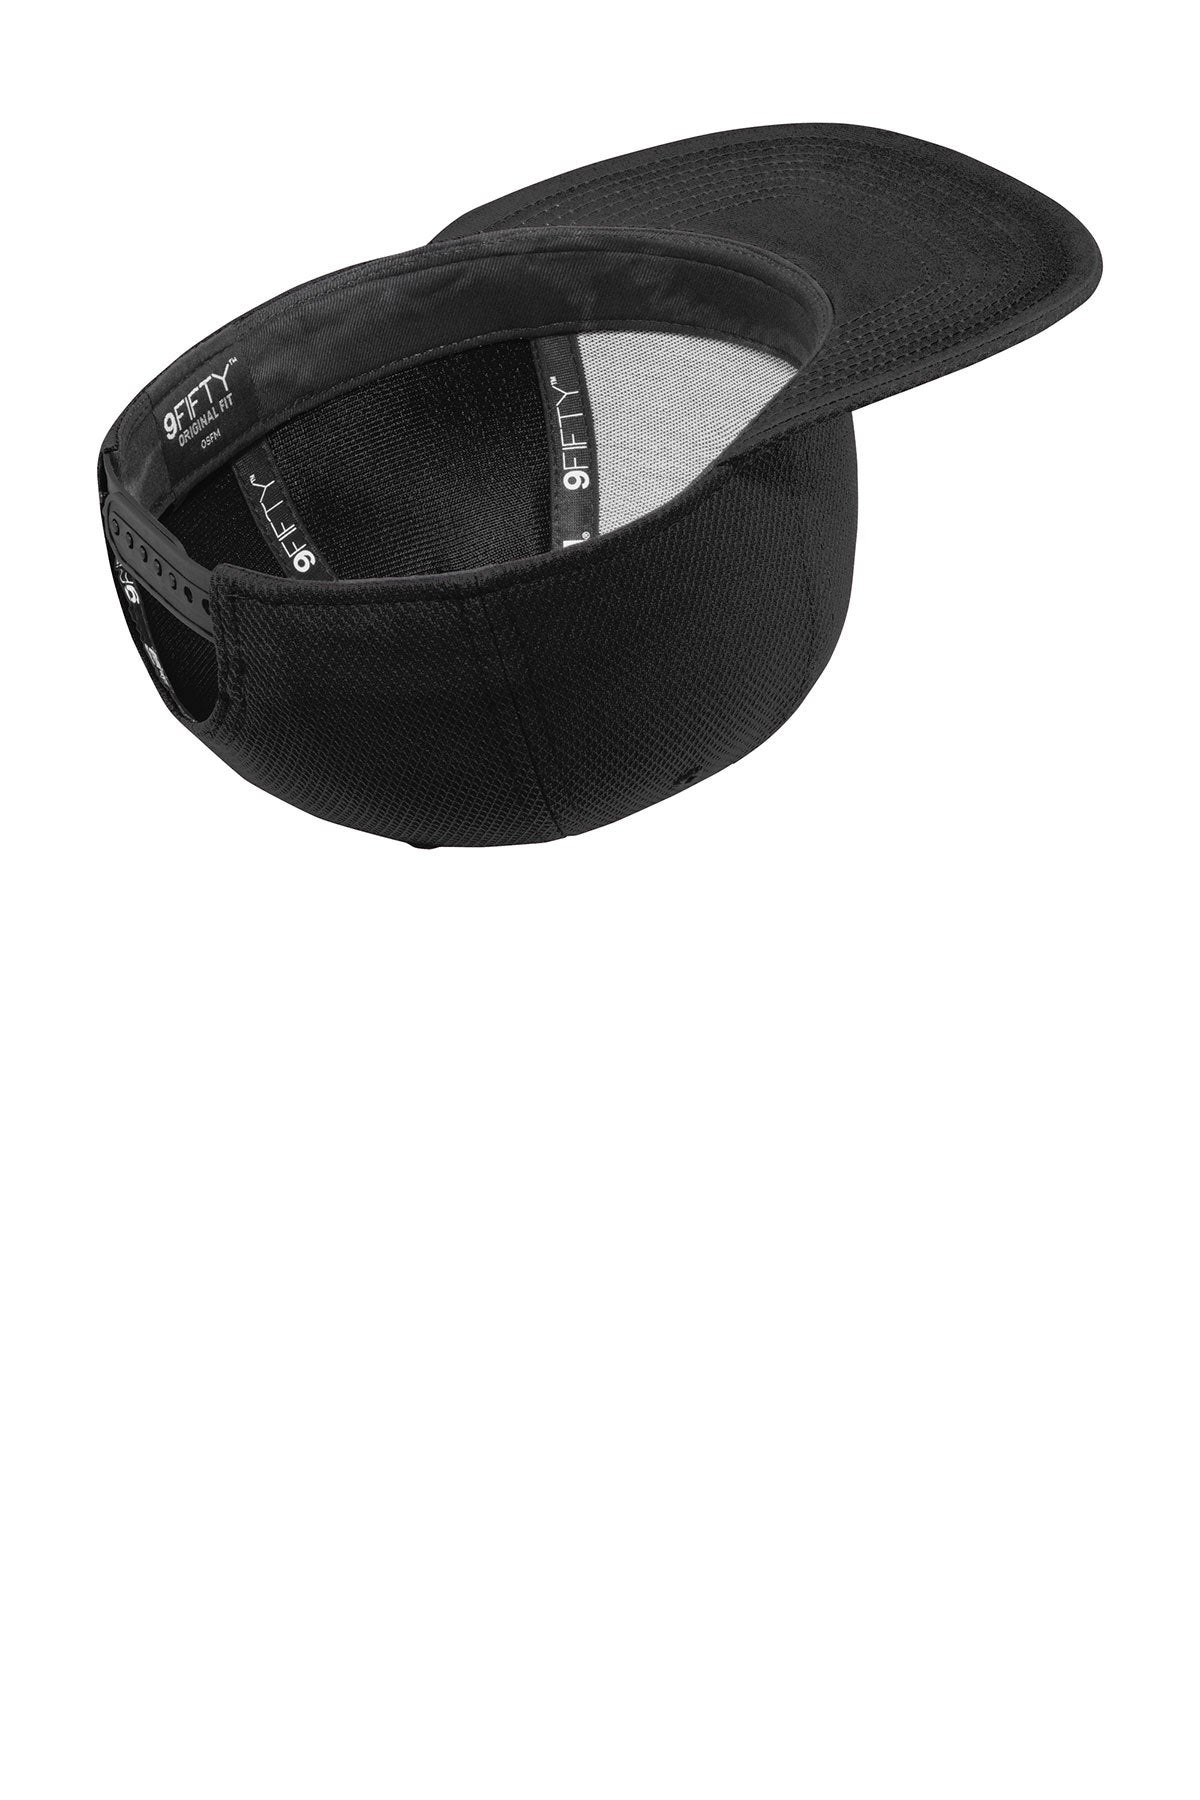 New Era Original Fit Snapback Custom Caps, Black